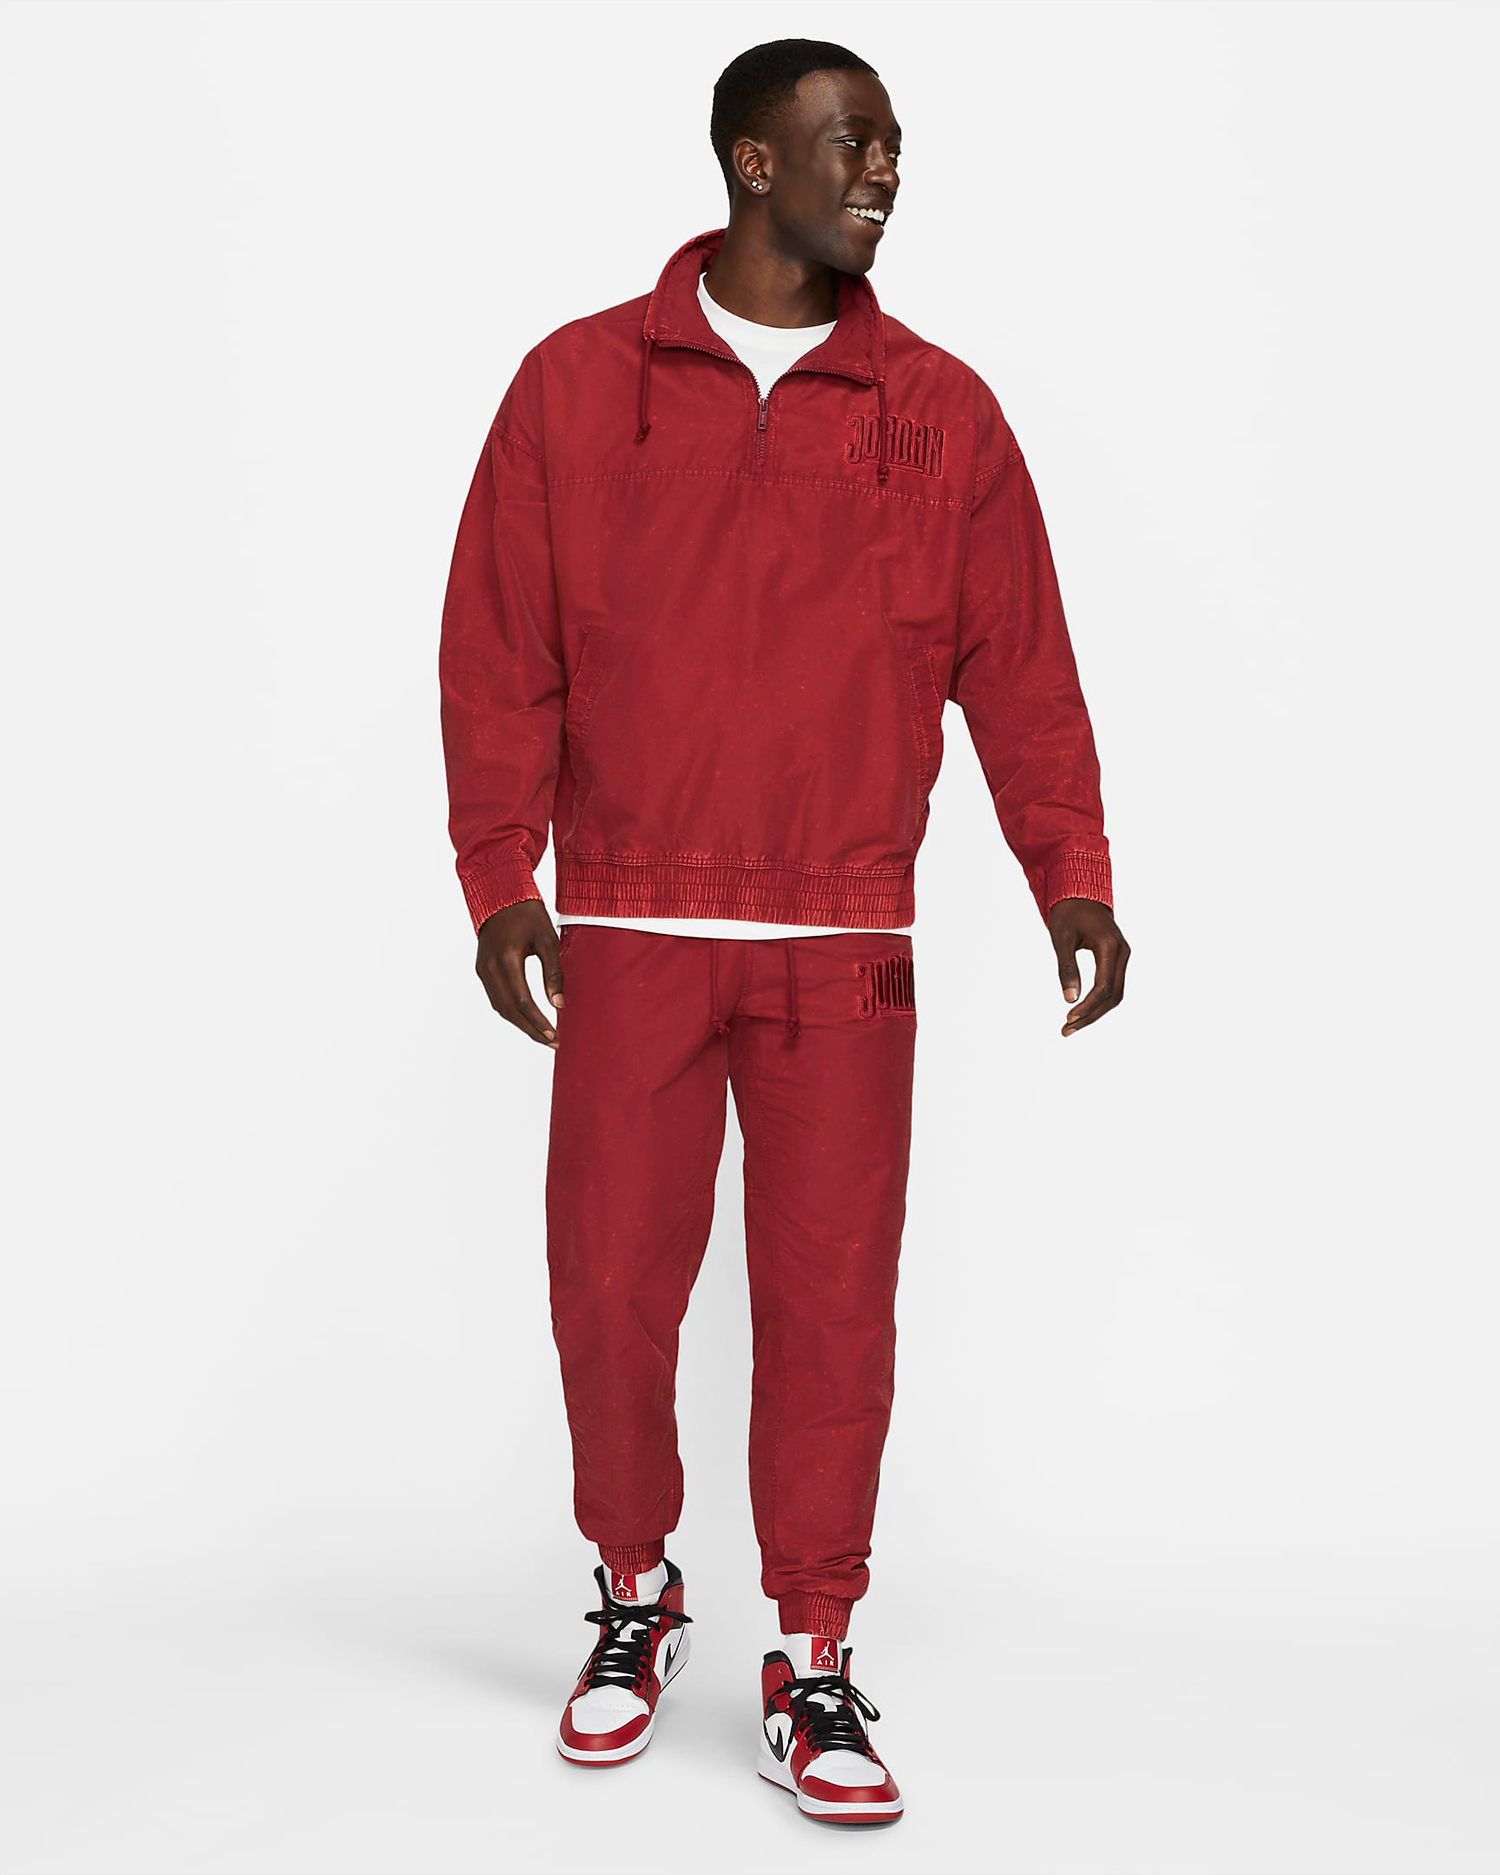 jordan-team-red-sport-dna-jacket-pants-outfit